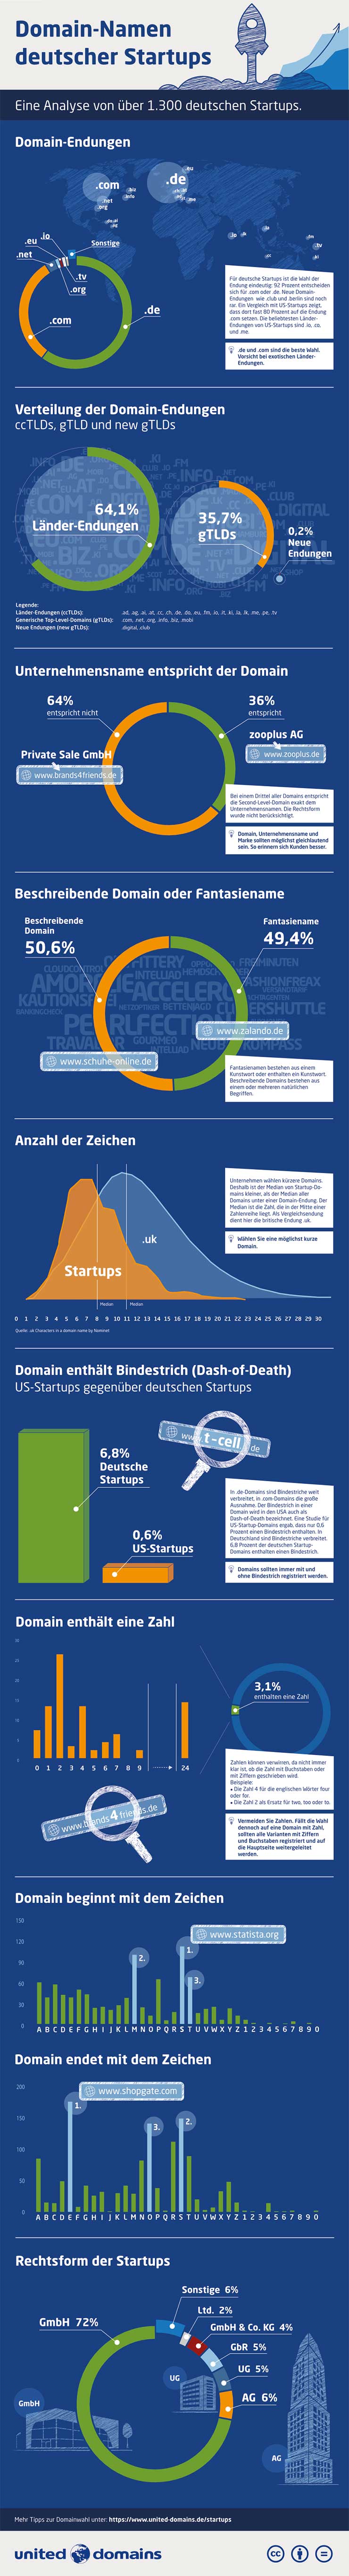 infografik-startup-domain-studie-2016